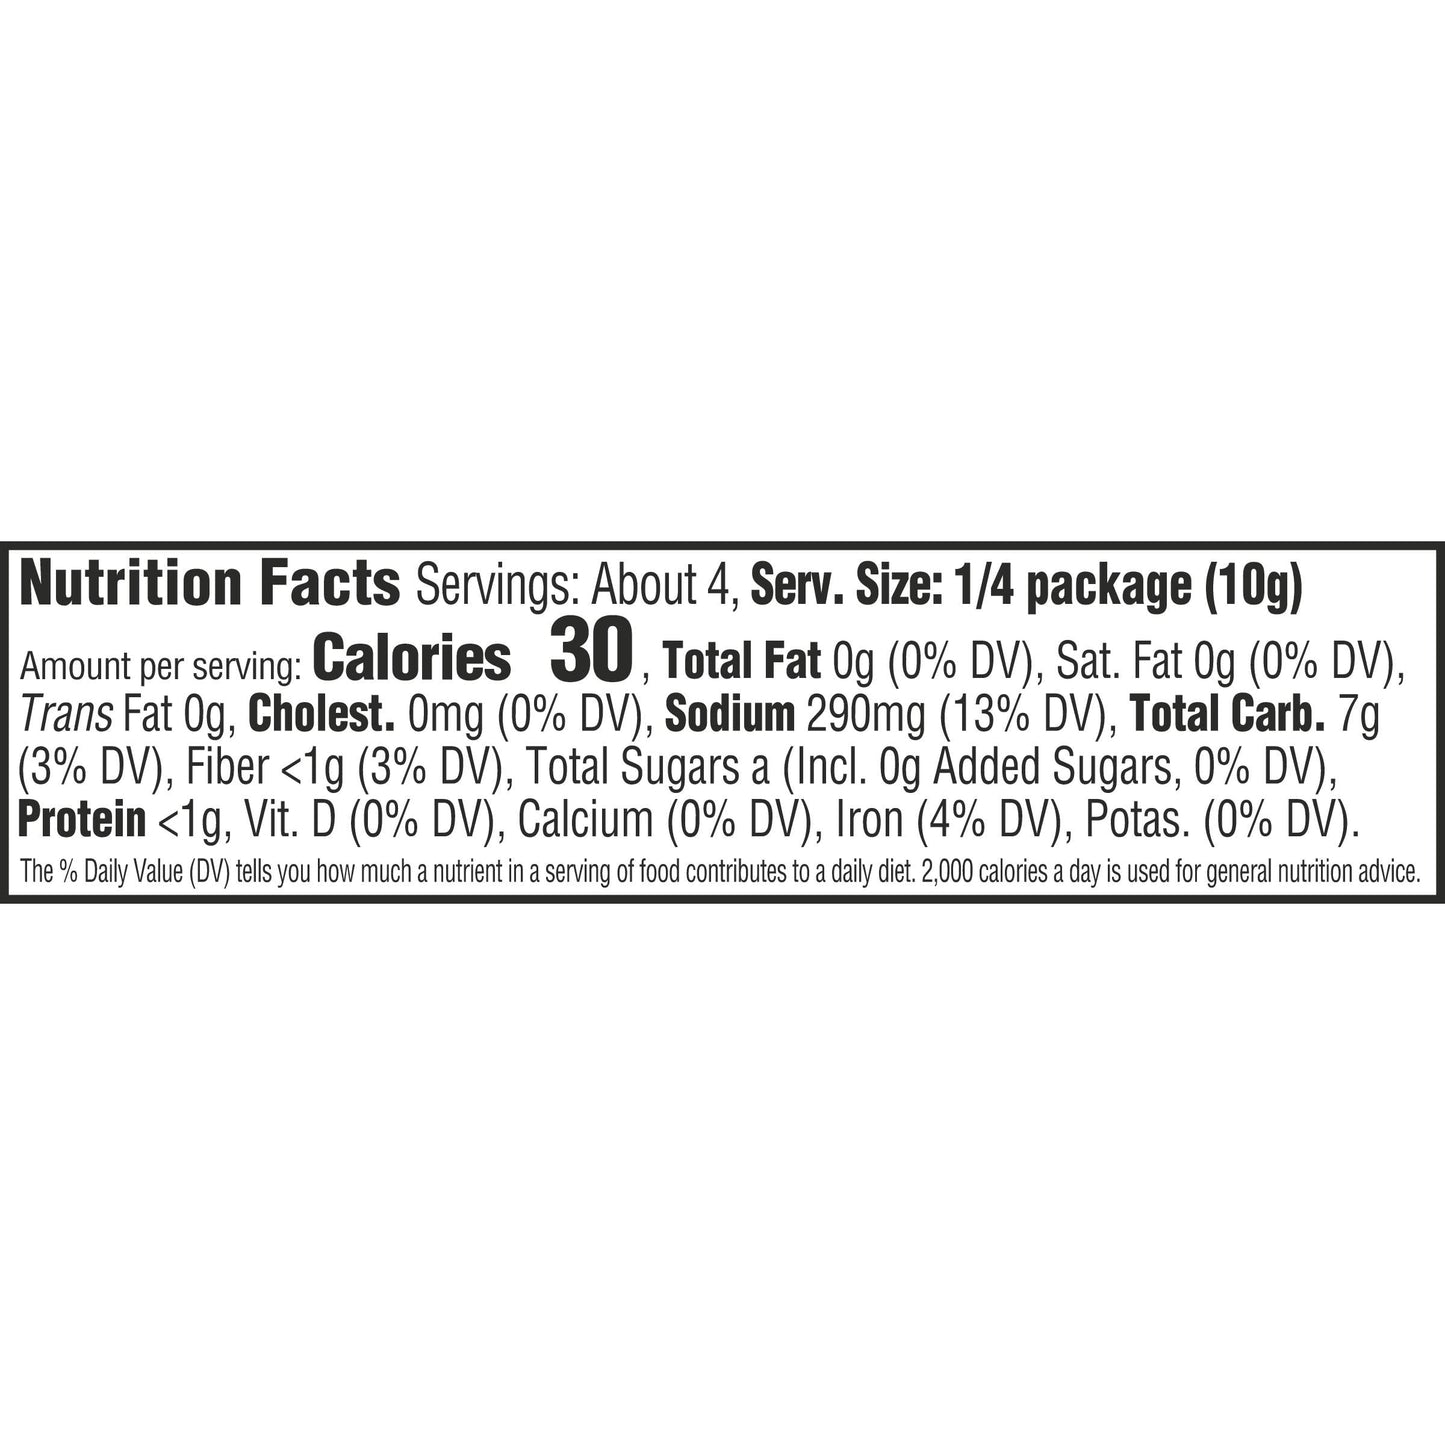 Jell-O Chocolate Flavor Zero Sugar Instant Reduced Calorie Pudding & Pie Filling Mix, 1.4 oz Box